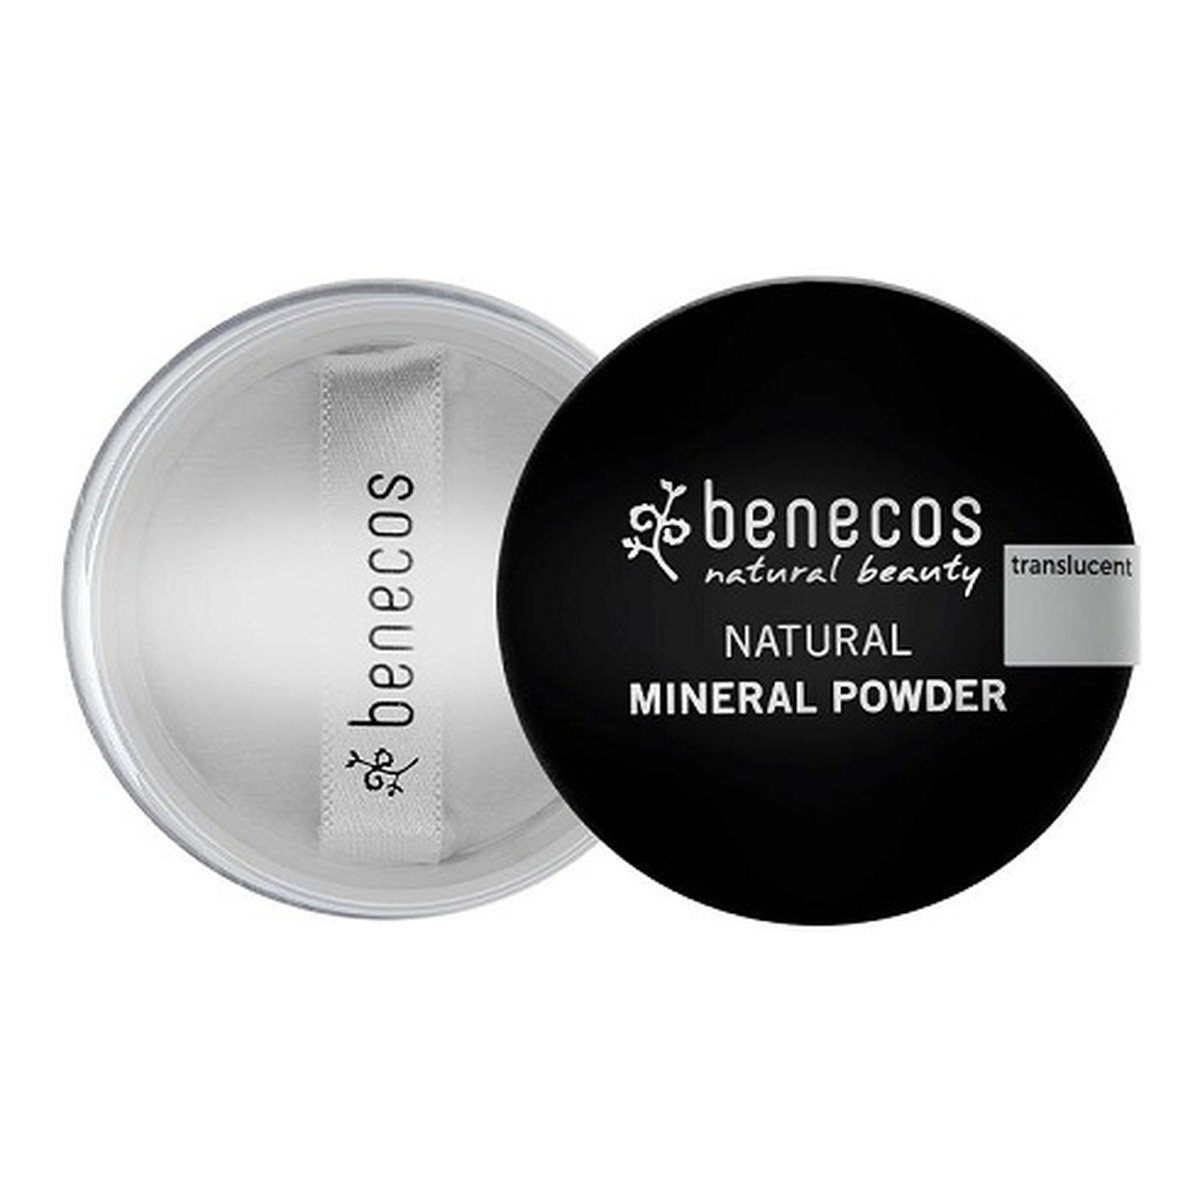 Benecos Natural Mineral Powder Sypki puder mineralny Translucent 10g